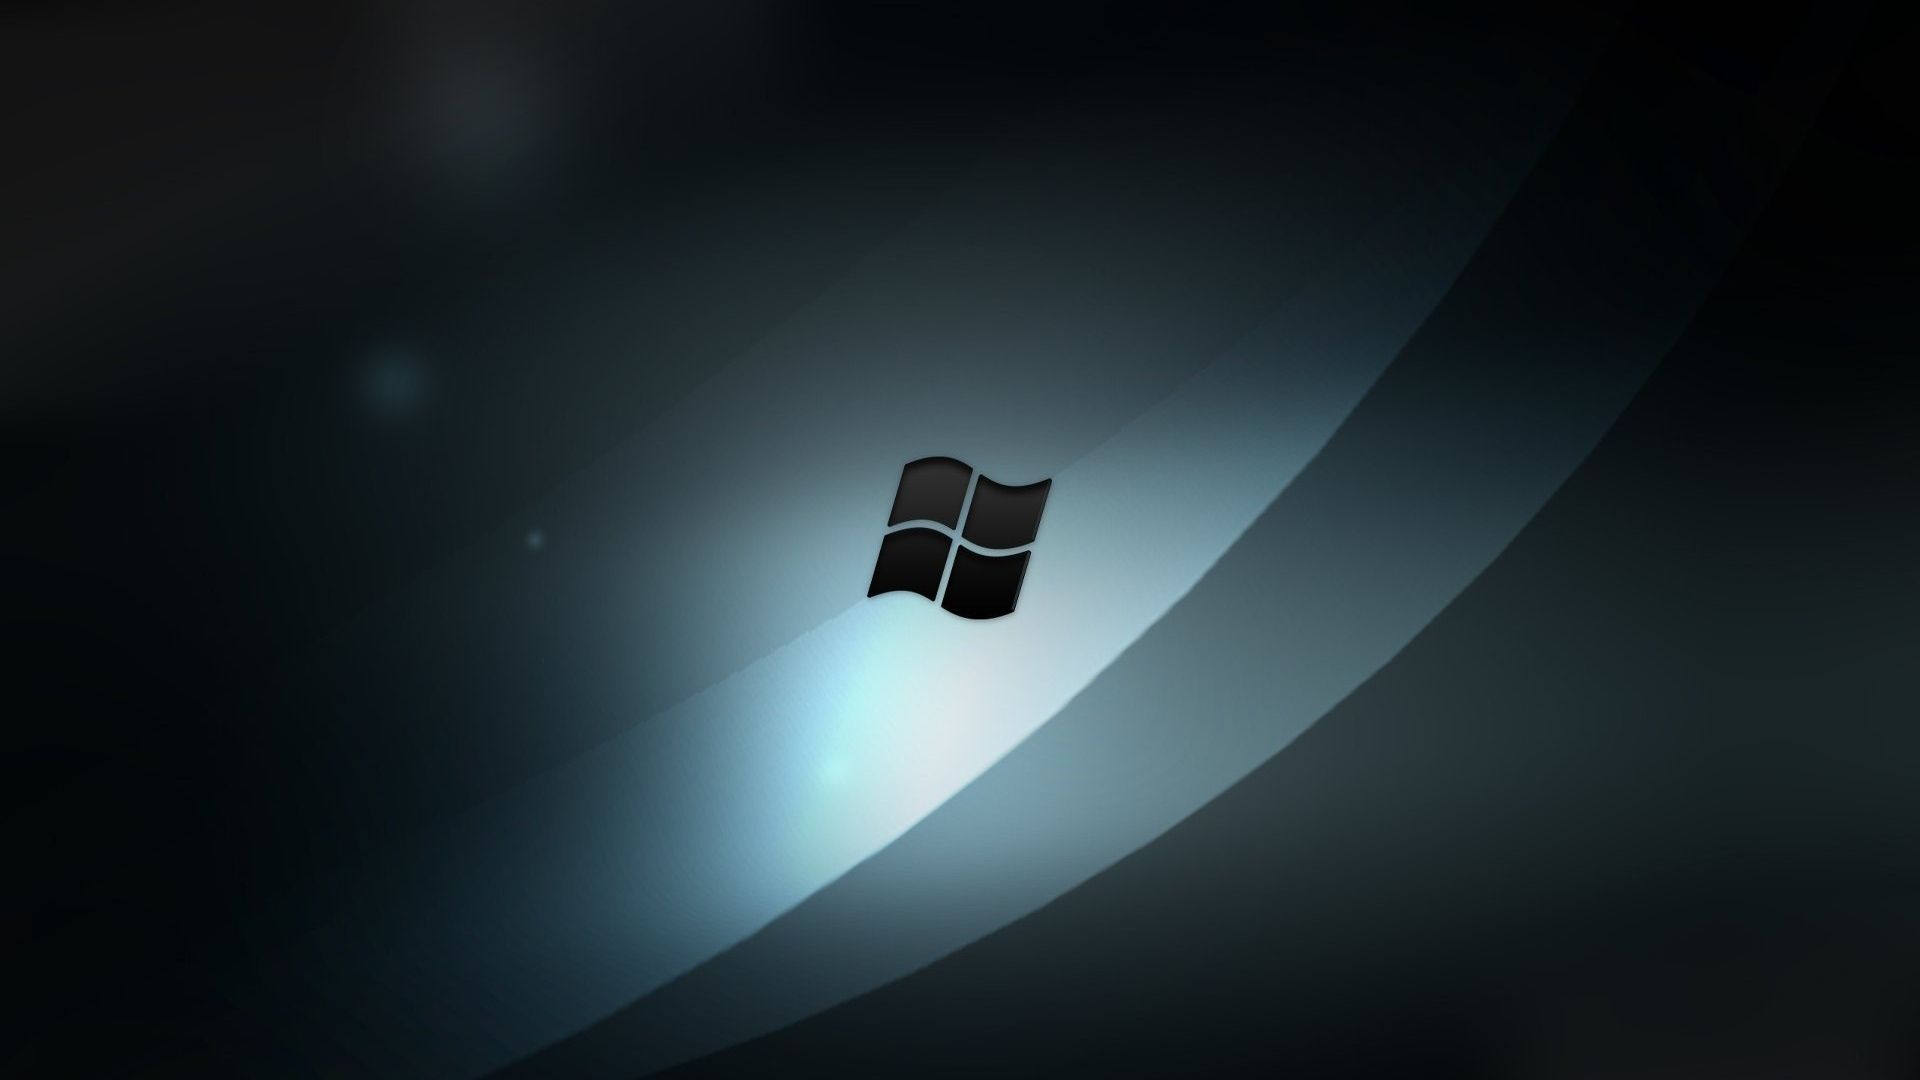 Windows 7 sign symbol bw 32983 1920x1080